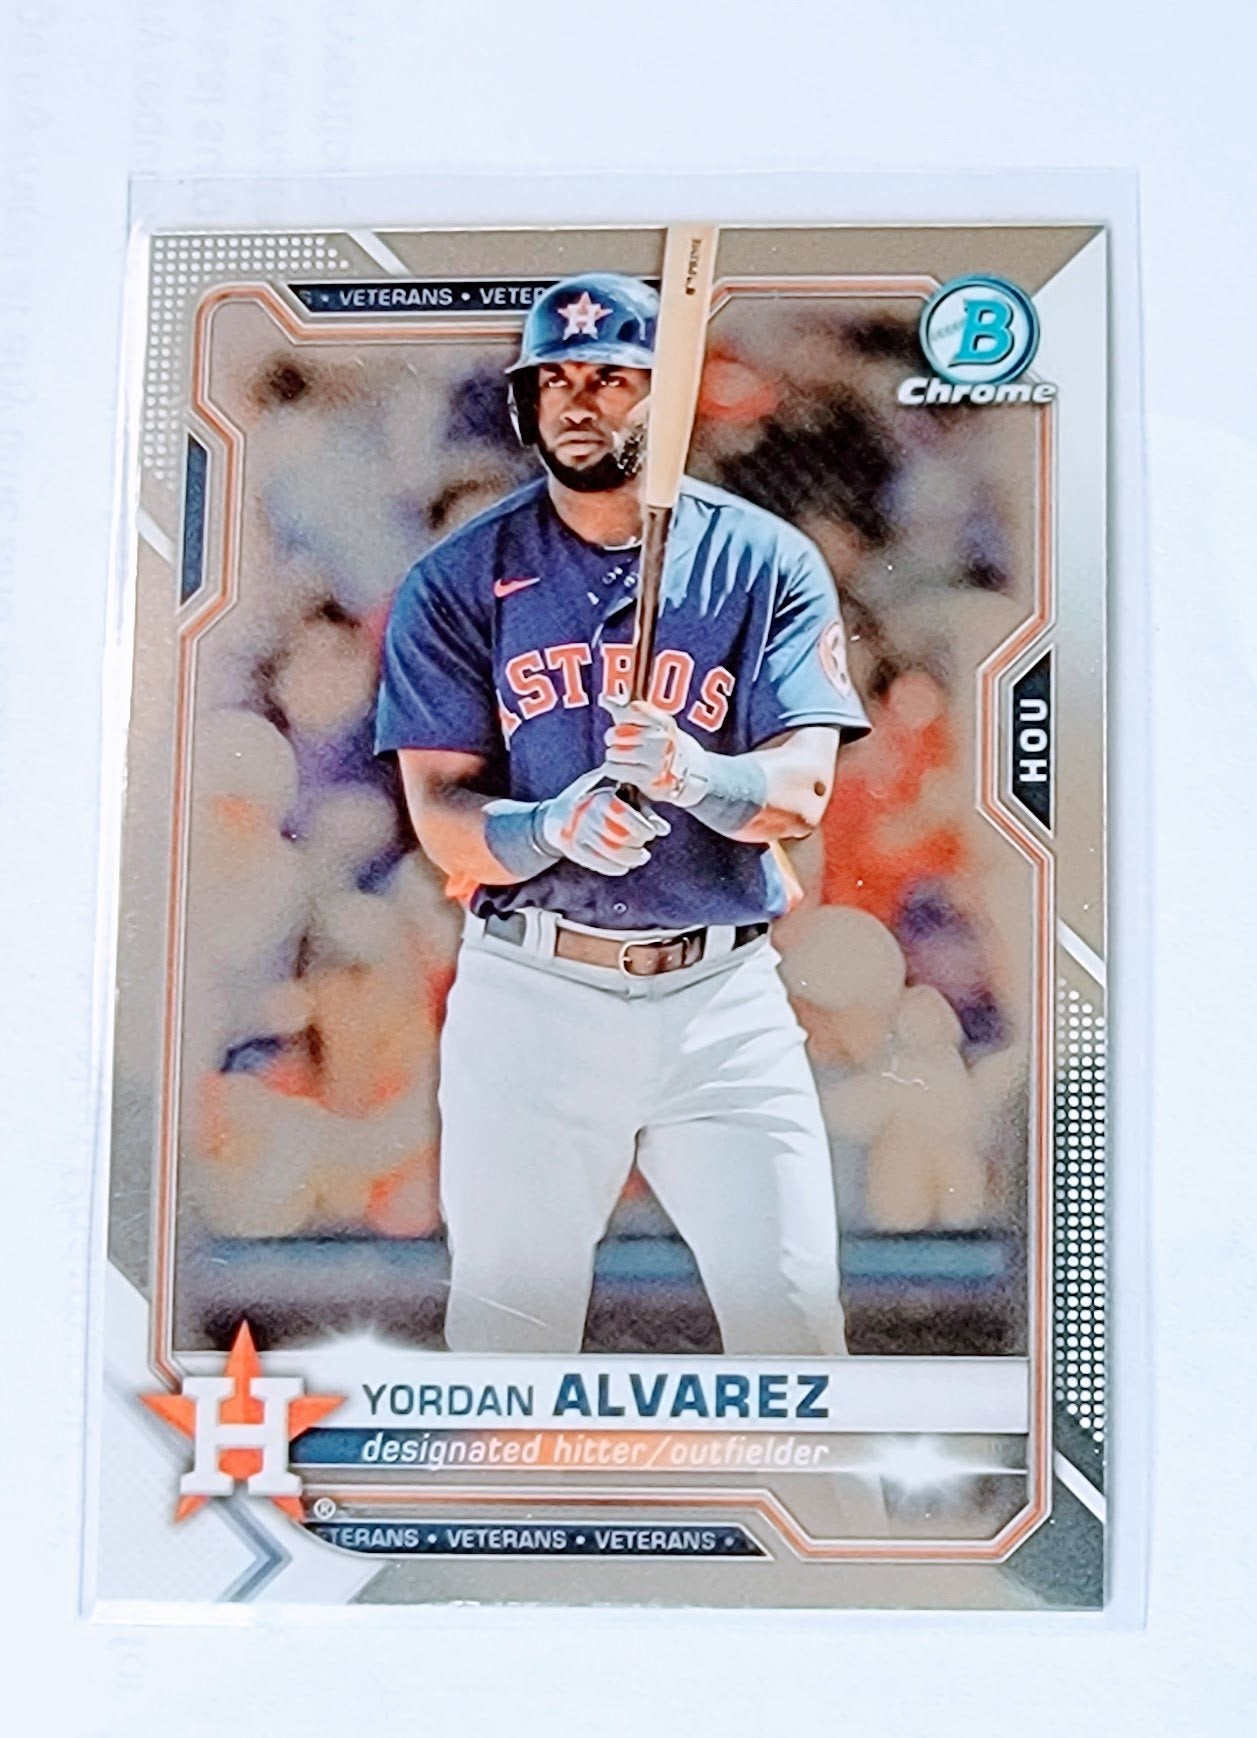 2021 Bowman Chrome Yordan Alvarez Veterans Baseball Trading Card SMCB1 simple Xclusive Collectibles   